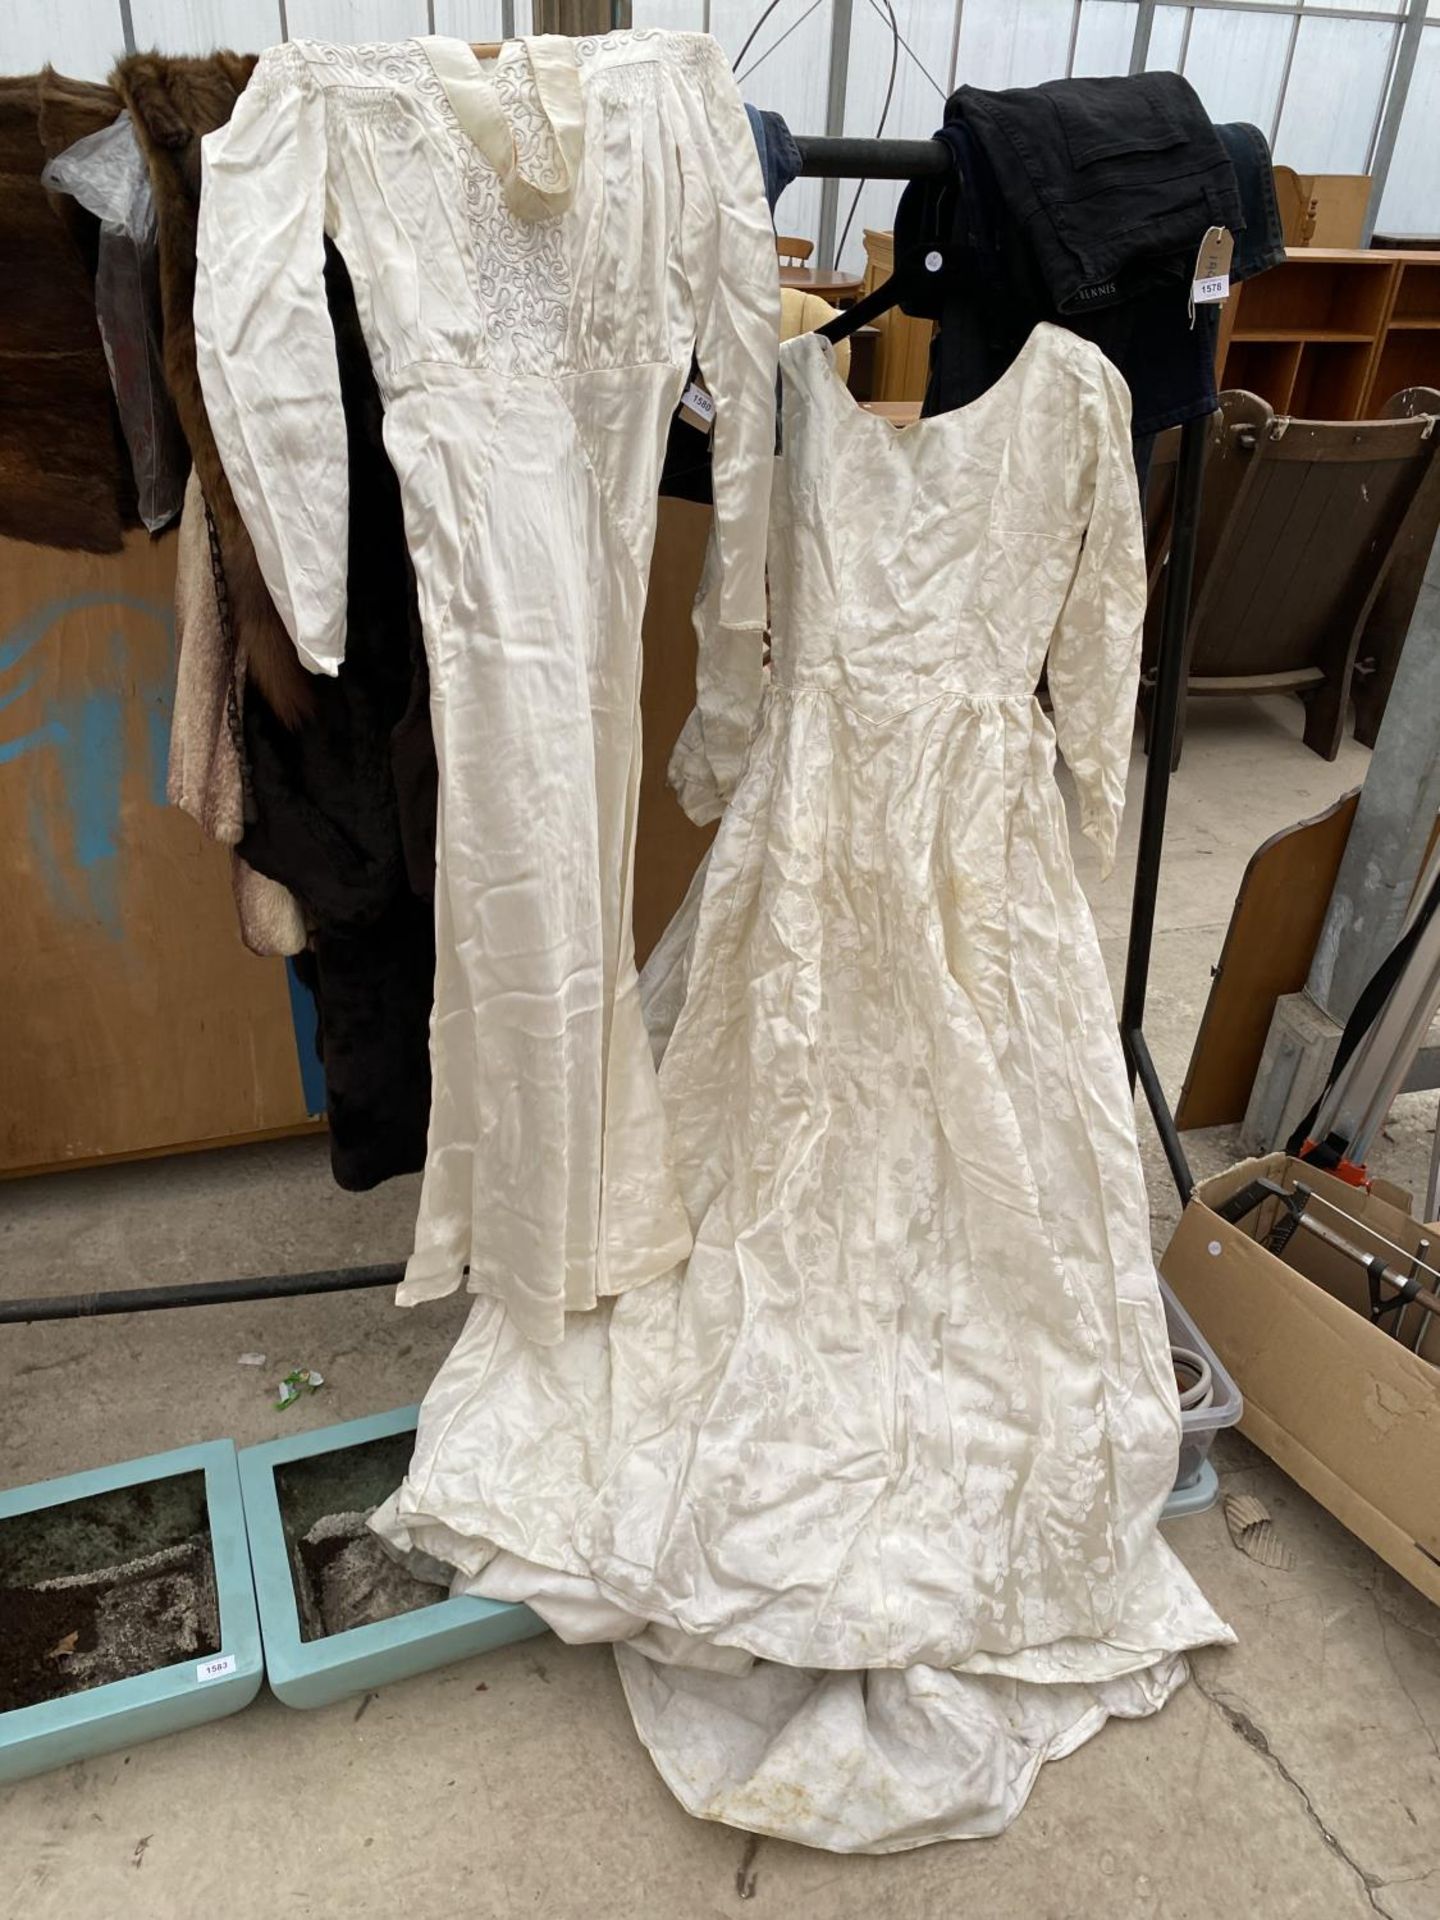 TWO VINTAGE 1940'S WEDDING DRESSES